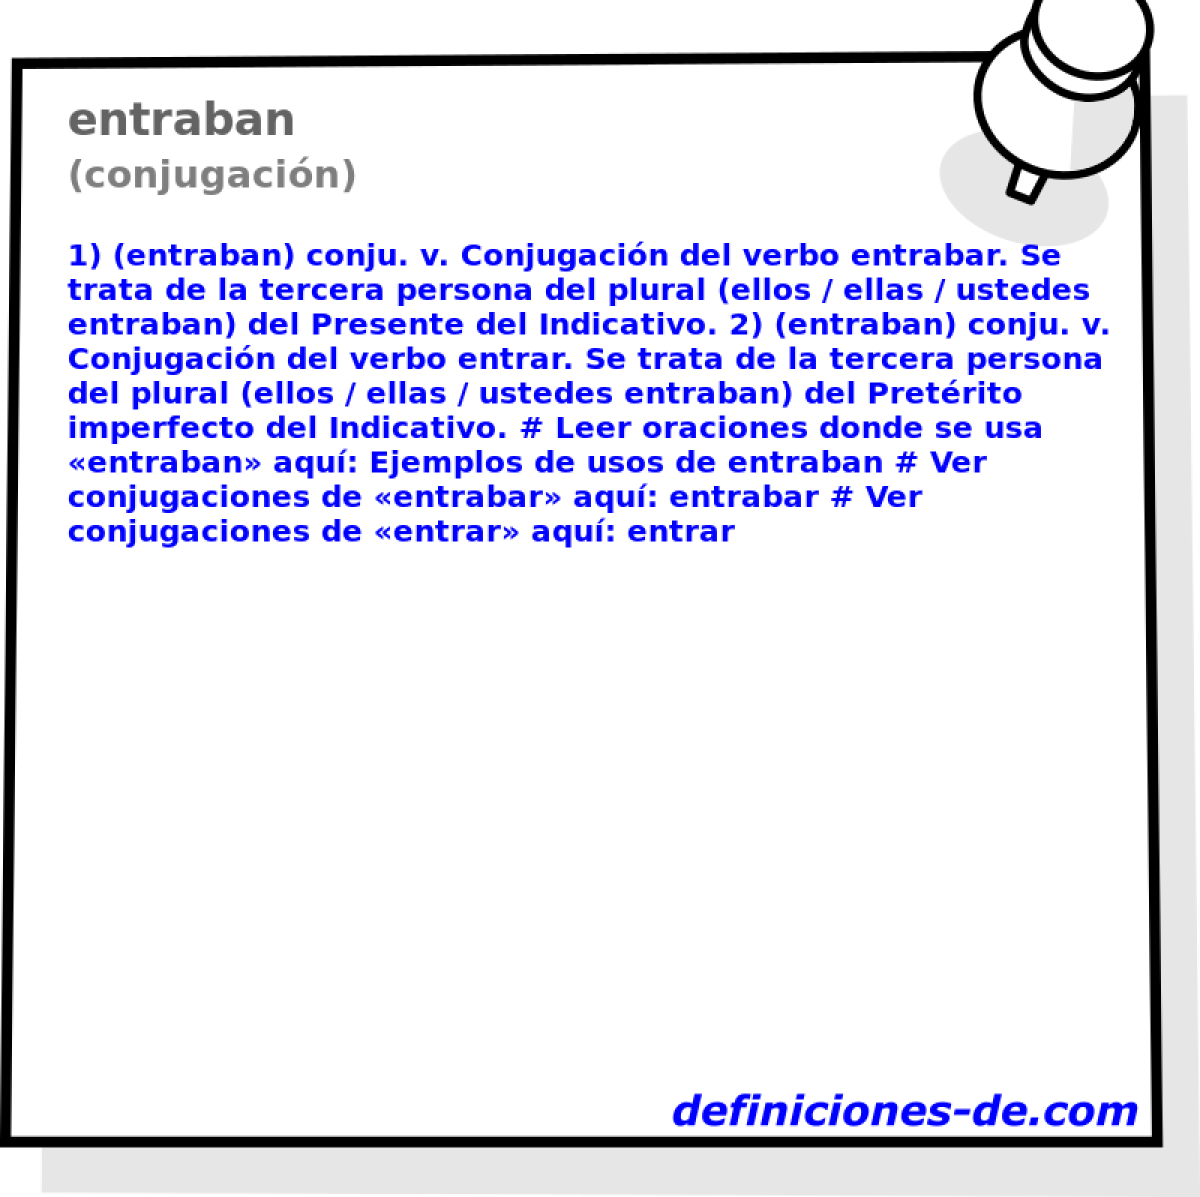 entraban (conjugacin)